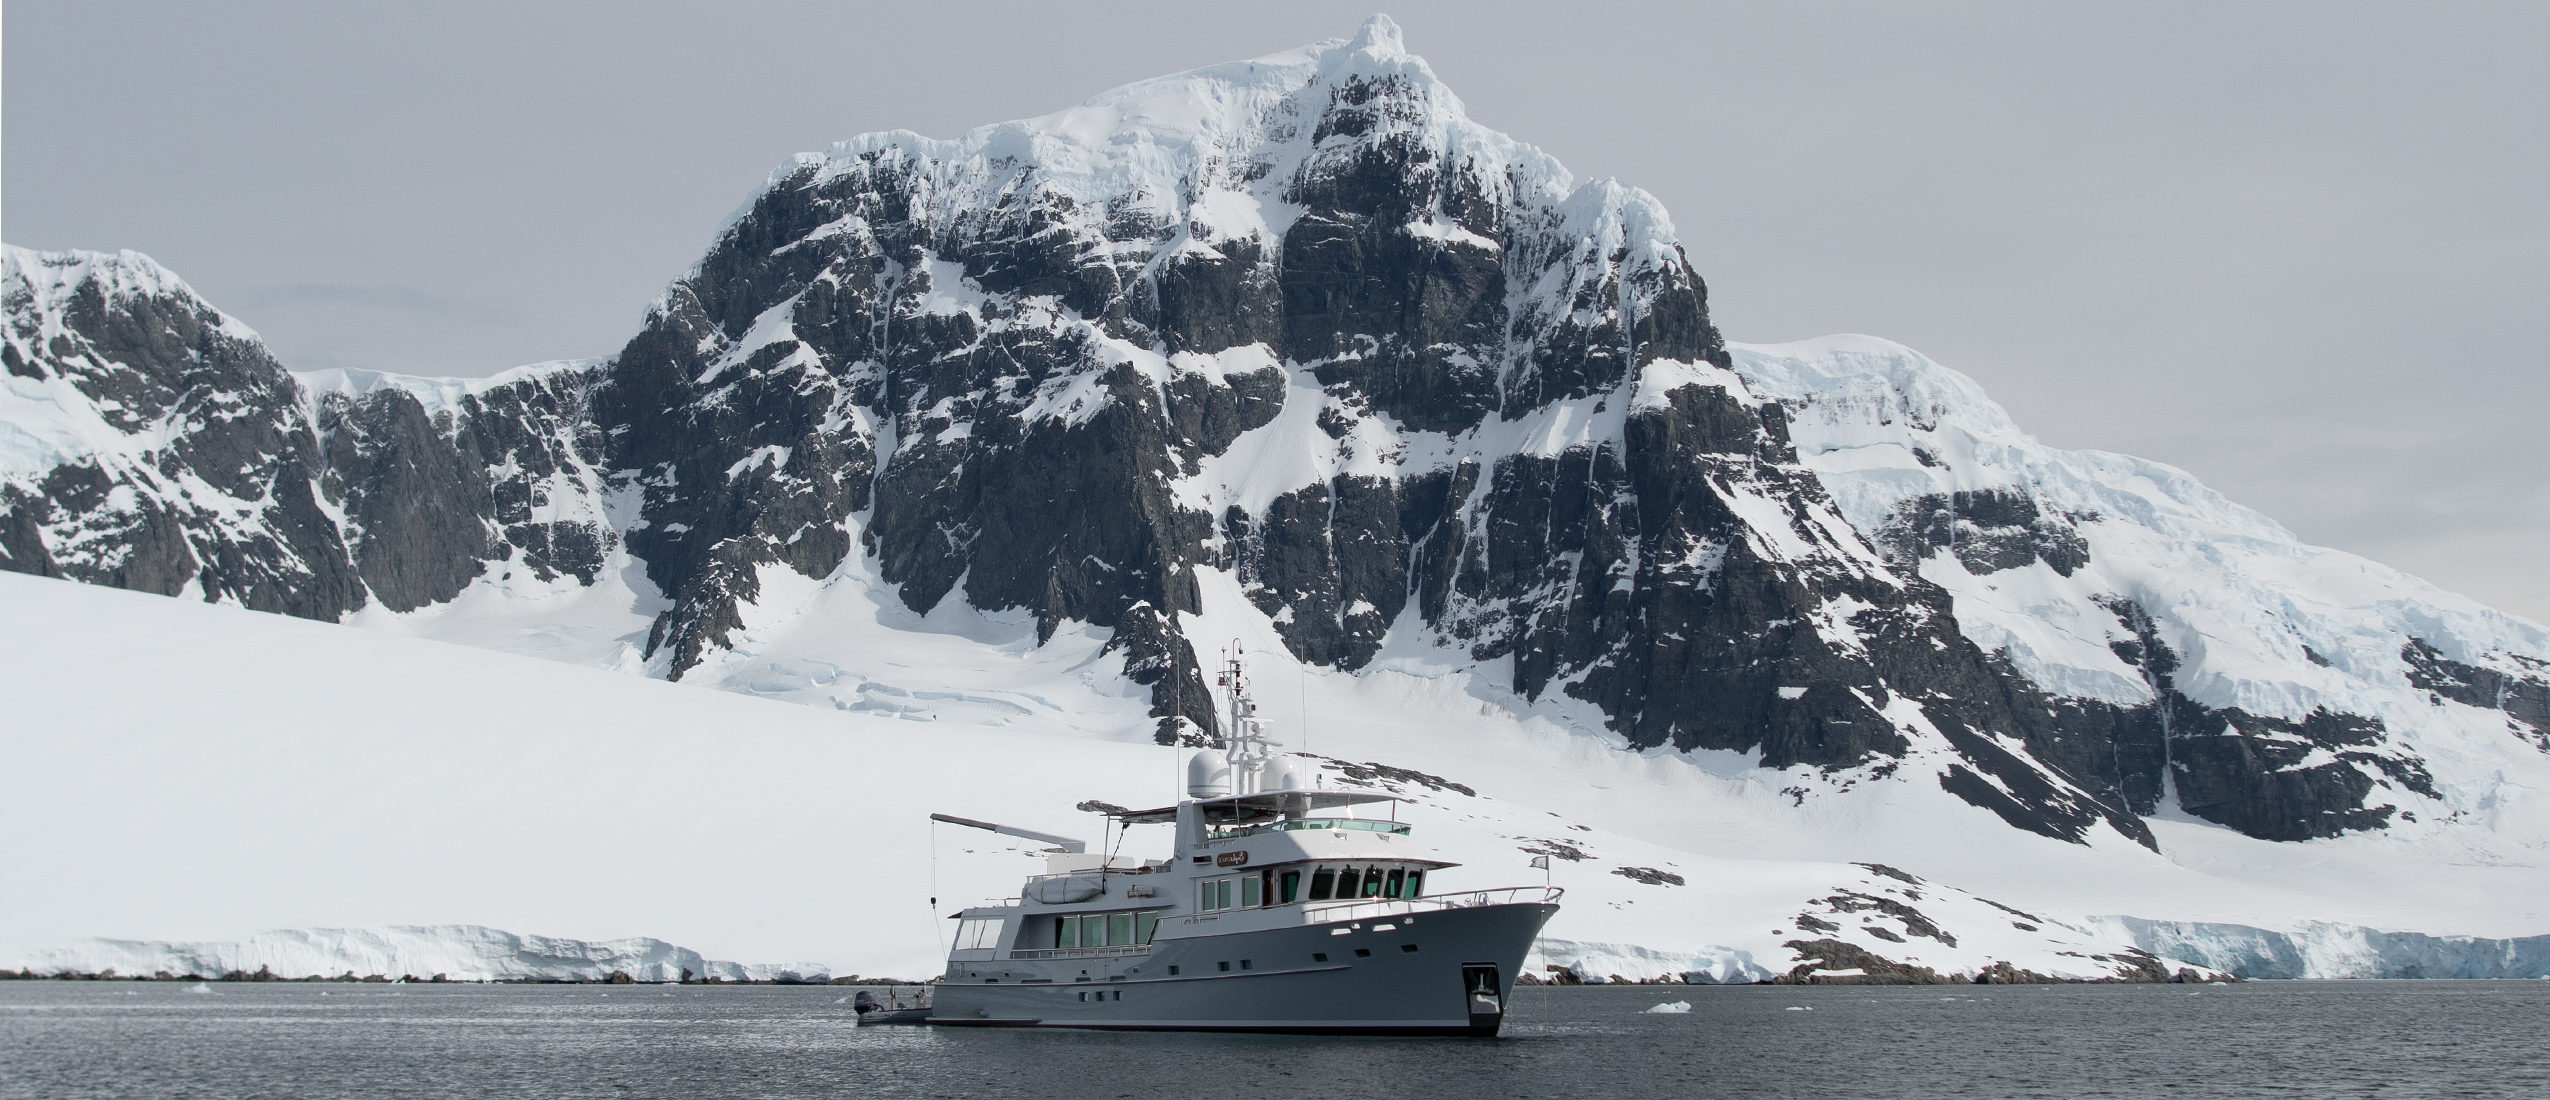 Vripack - Gayle Force - Doggersbank - Captain Scott - Antarctica Journey - Nature and wildlife